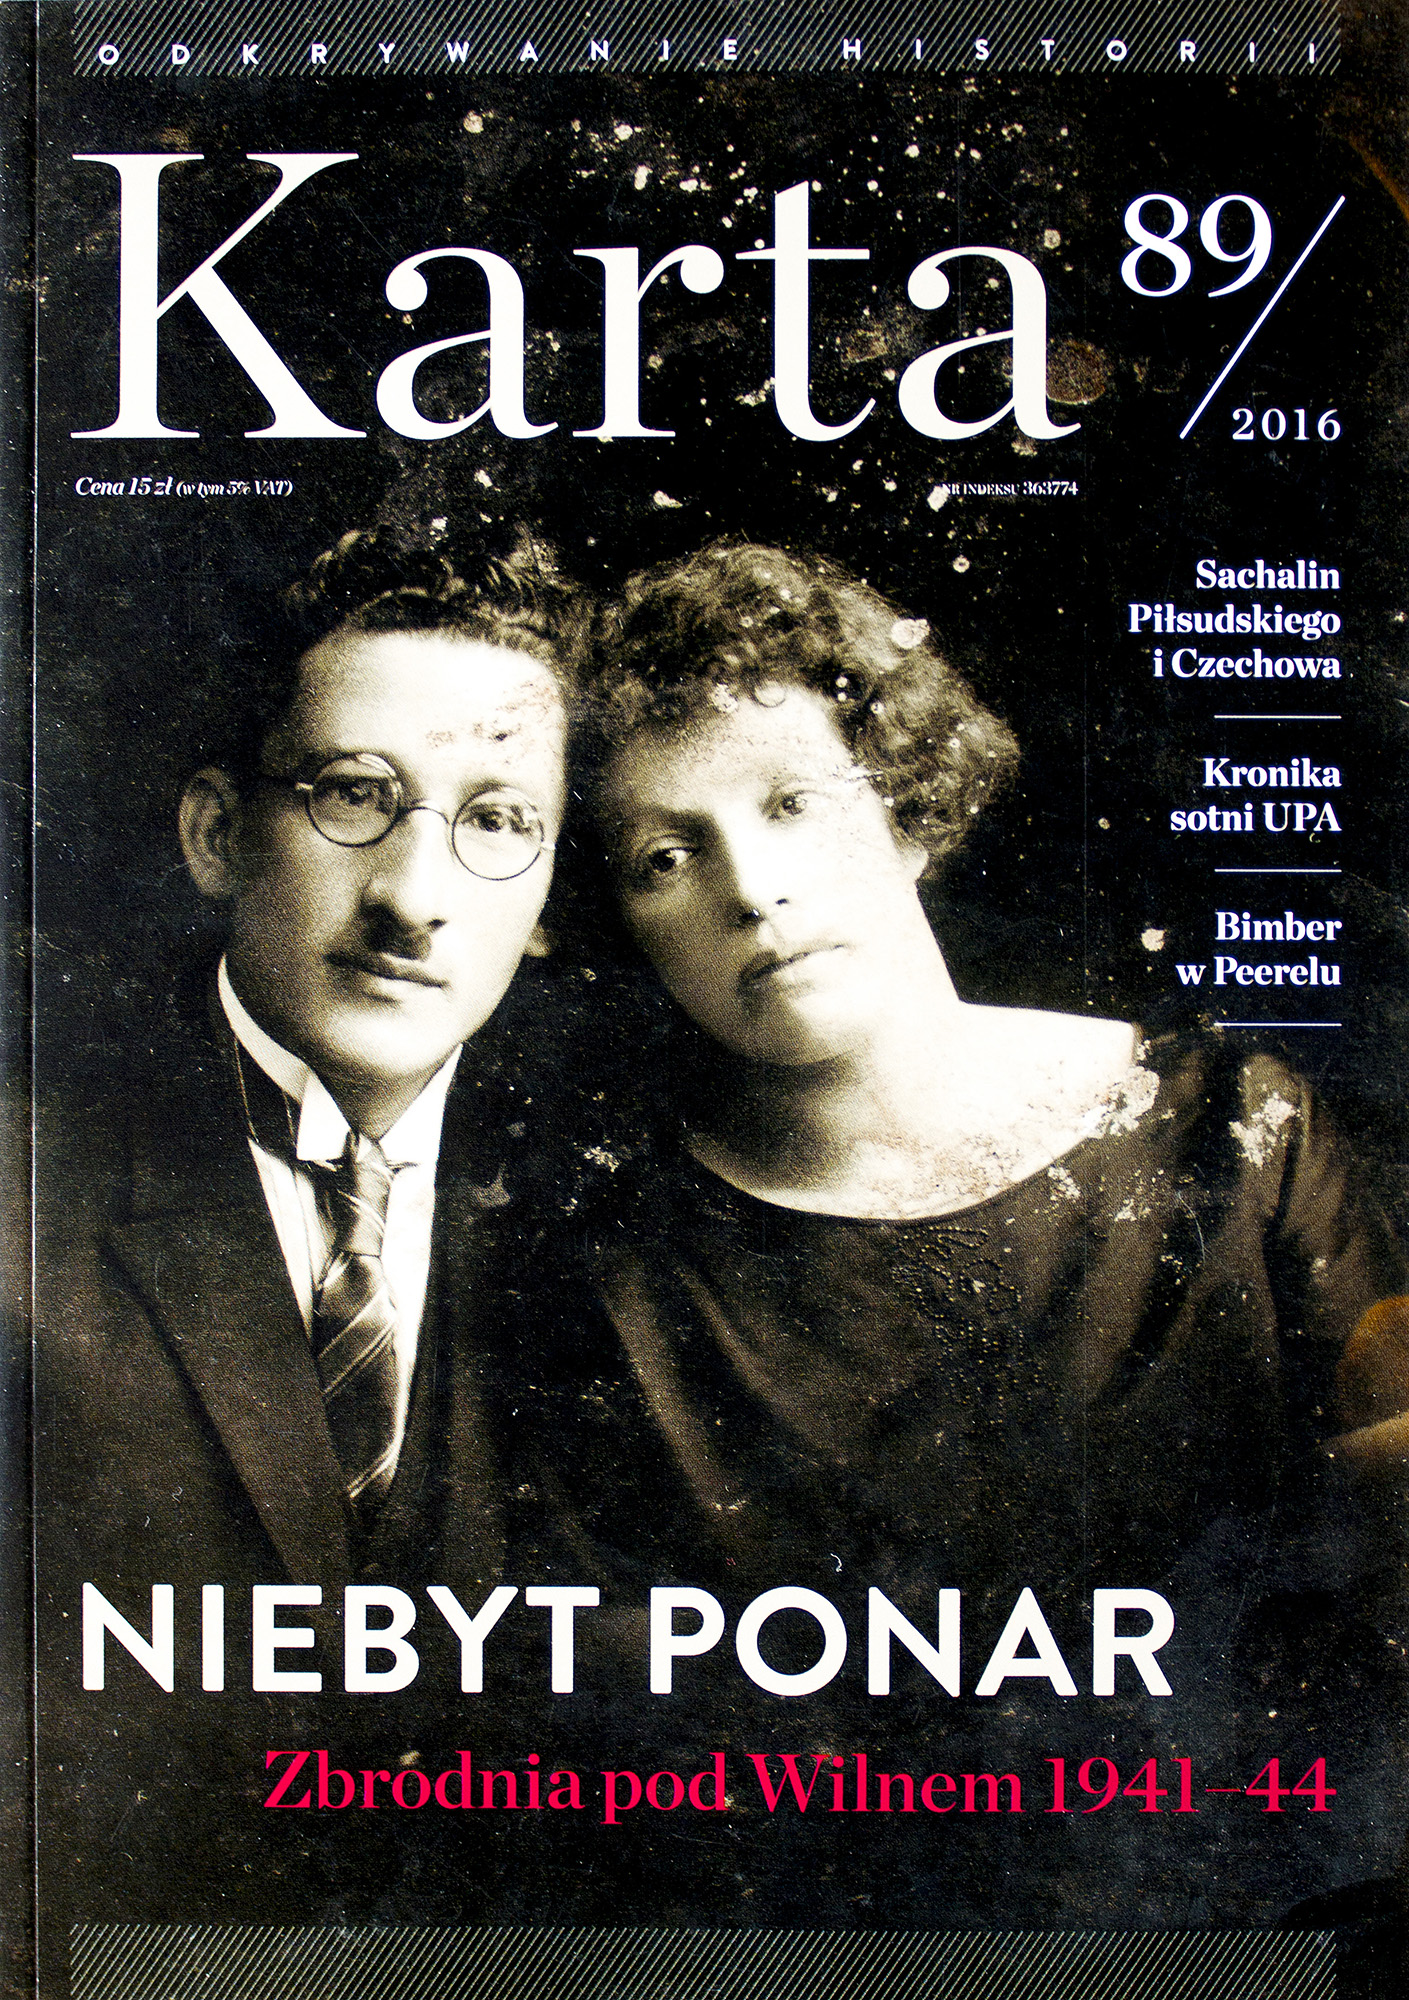  KARTA magazine no. 89/2016